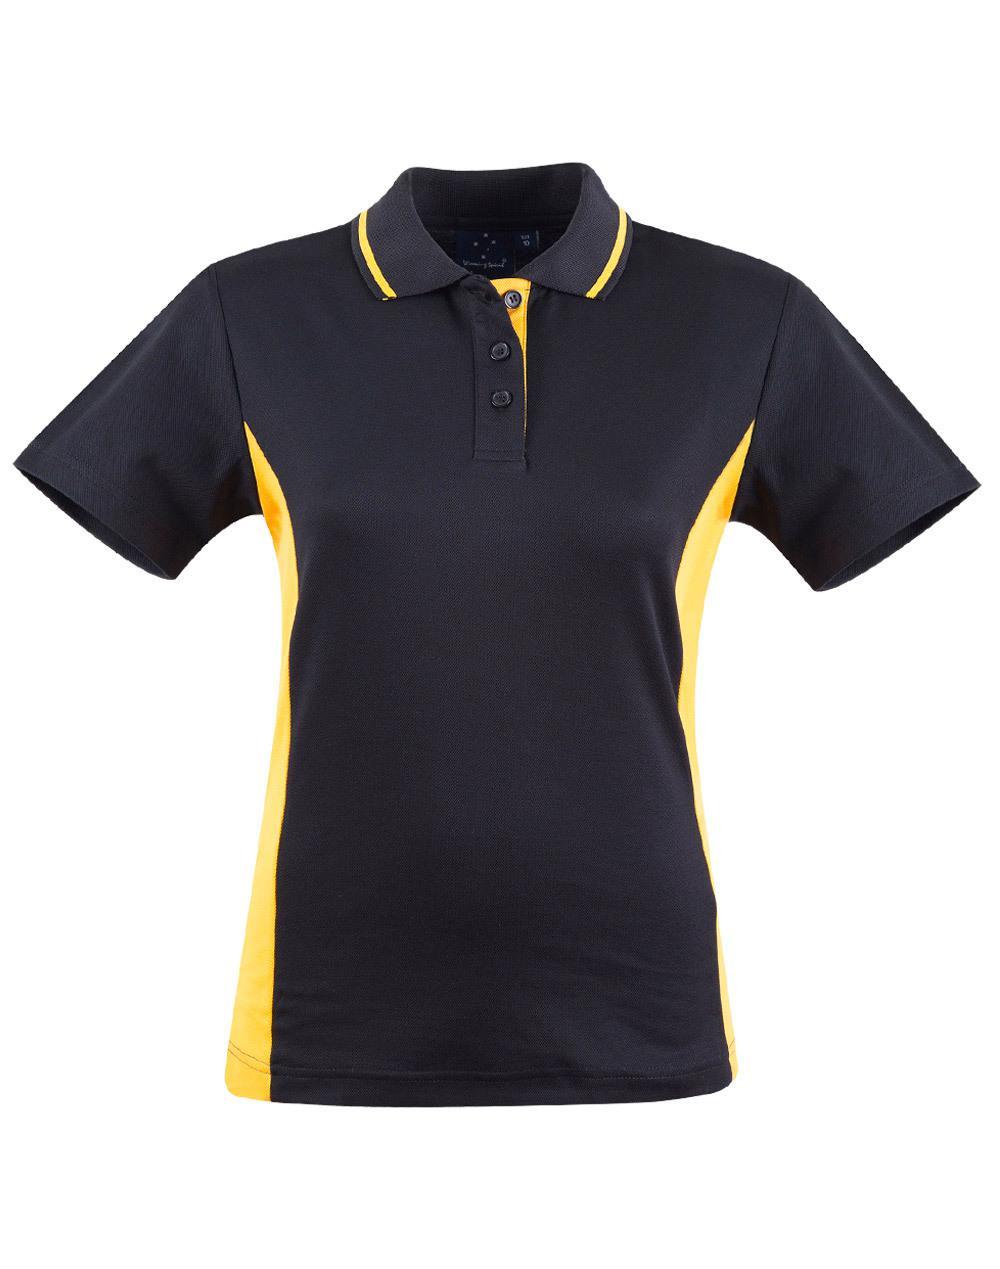 PS74 Sz 08 TEAMMATE Cotton Polyester Ladies Polo Shirt Black/Gold